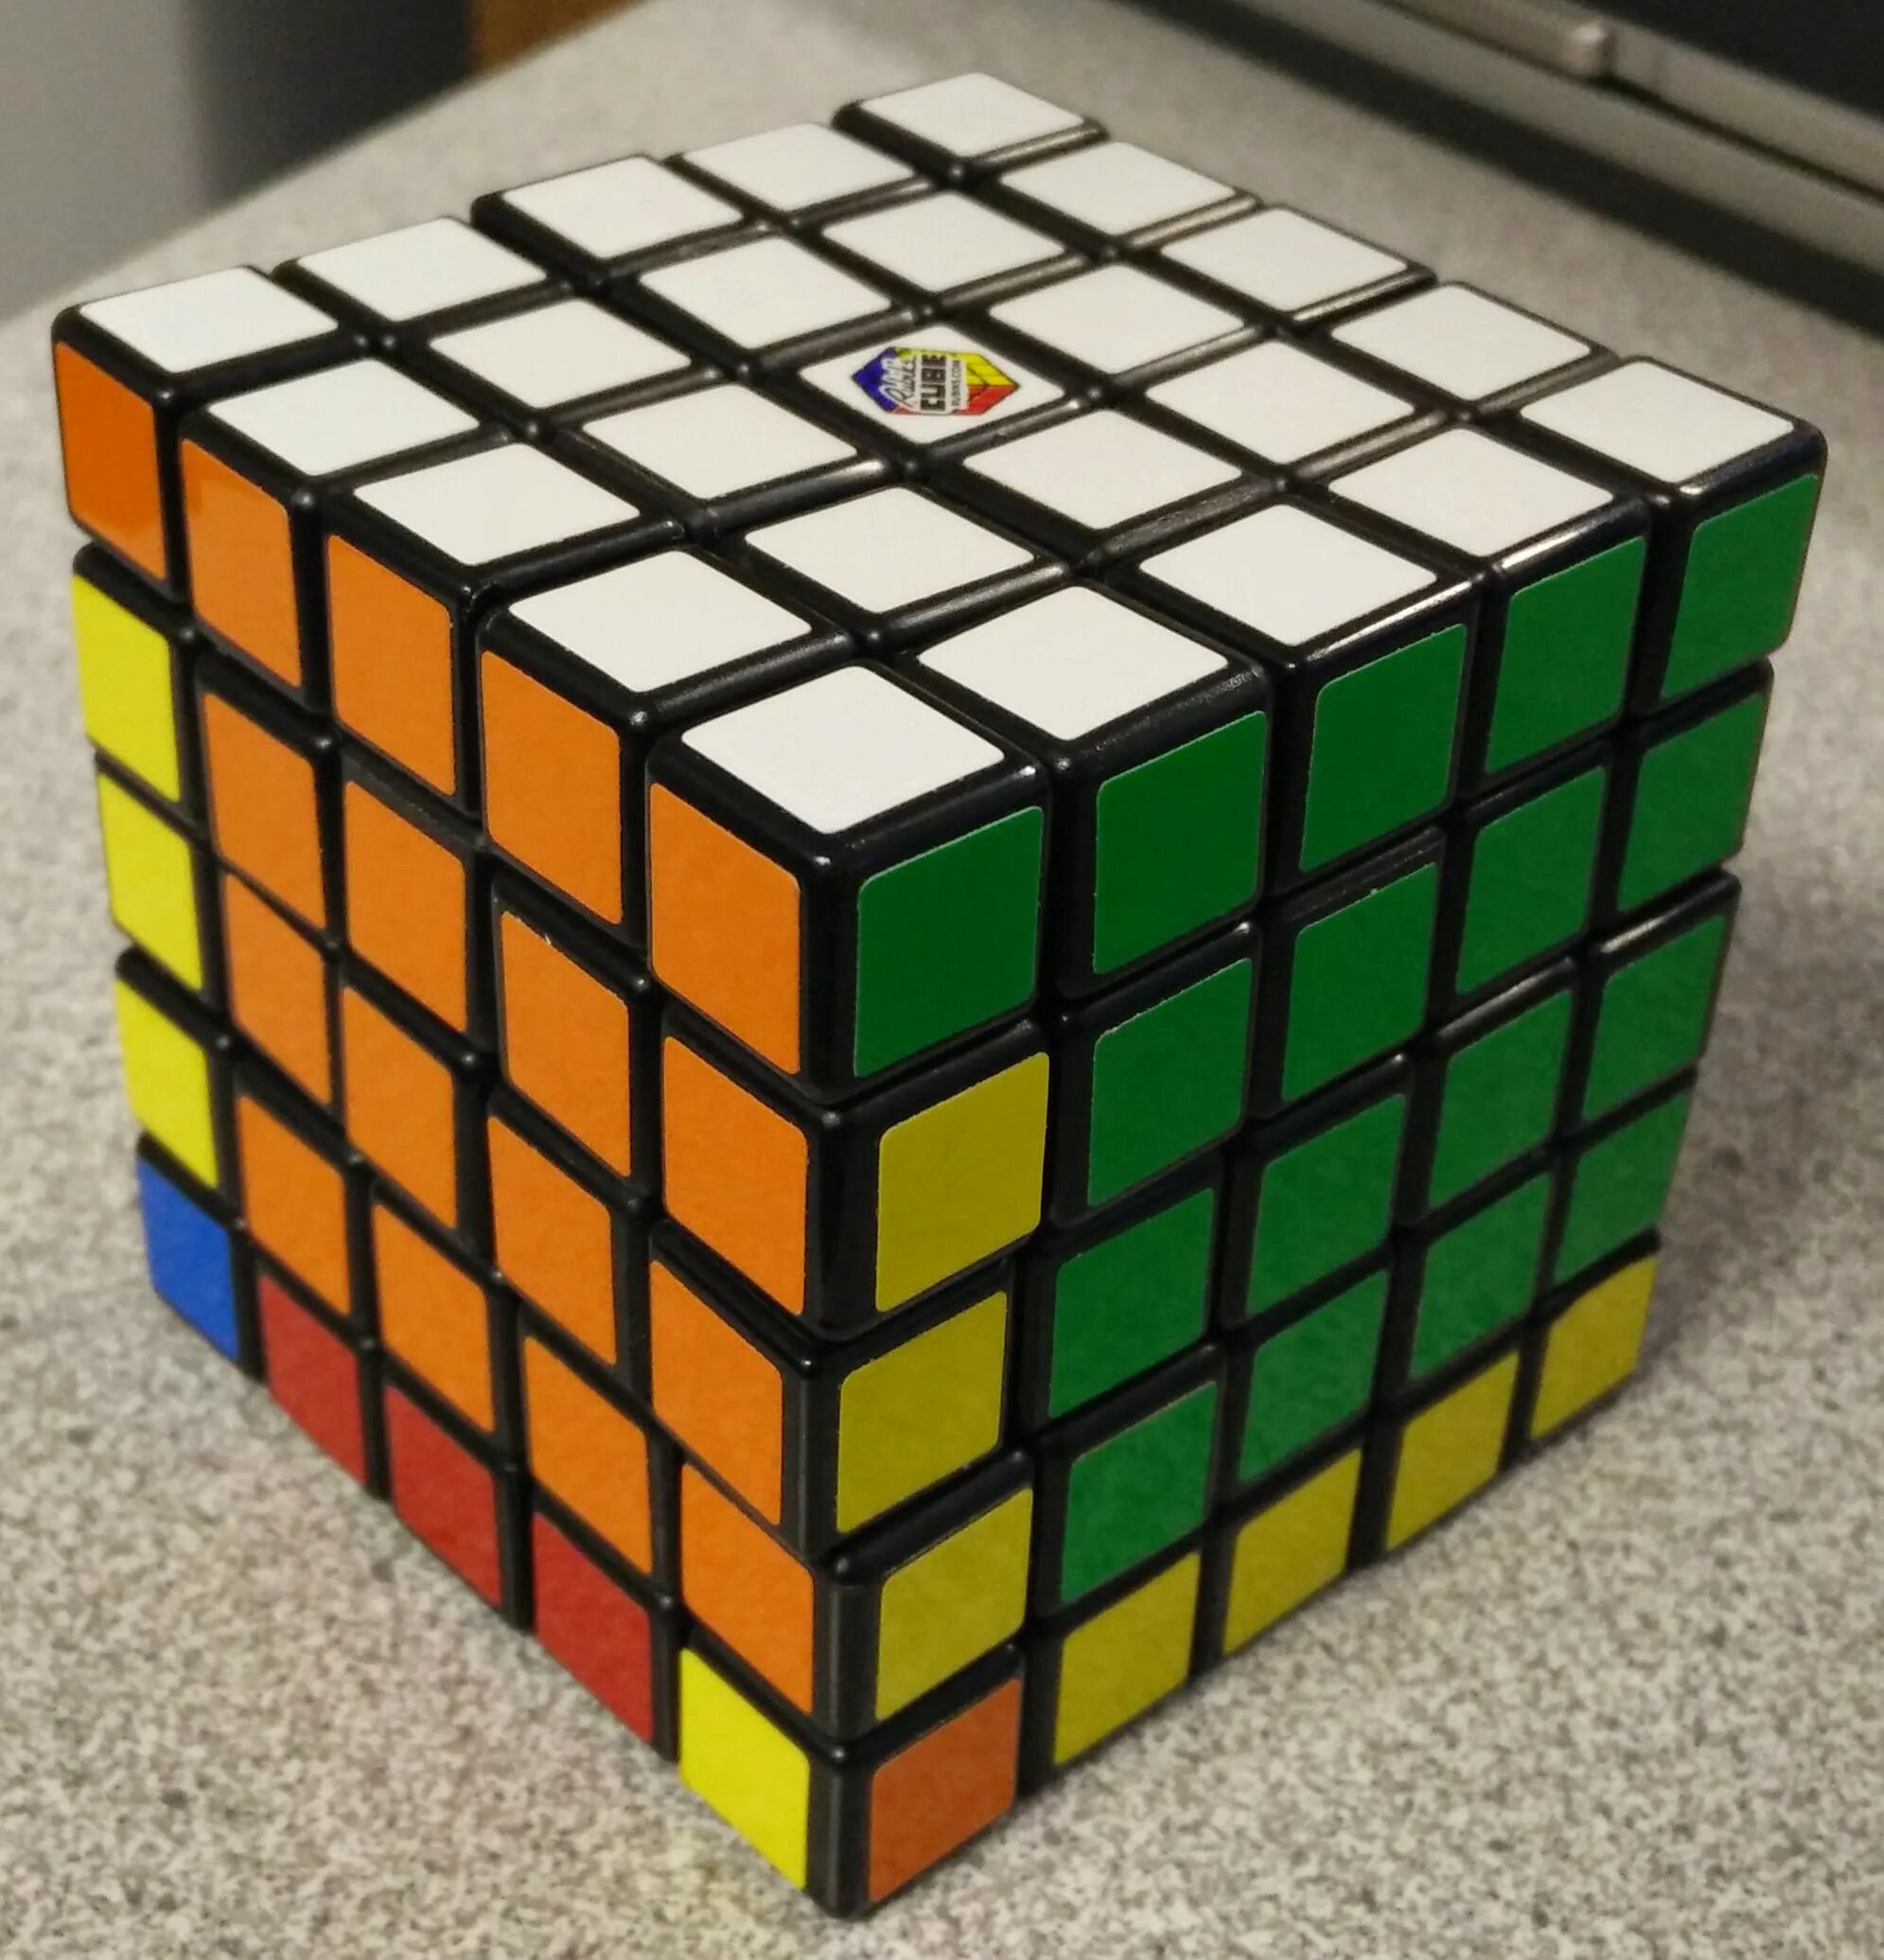 P2l кубик Рубика. Кубик Рубика Guanlong v2. Рубикс кубик Рубика 3х3 большой. Рубик 1 1 1. Cube видео